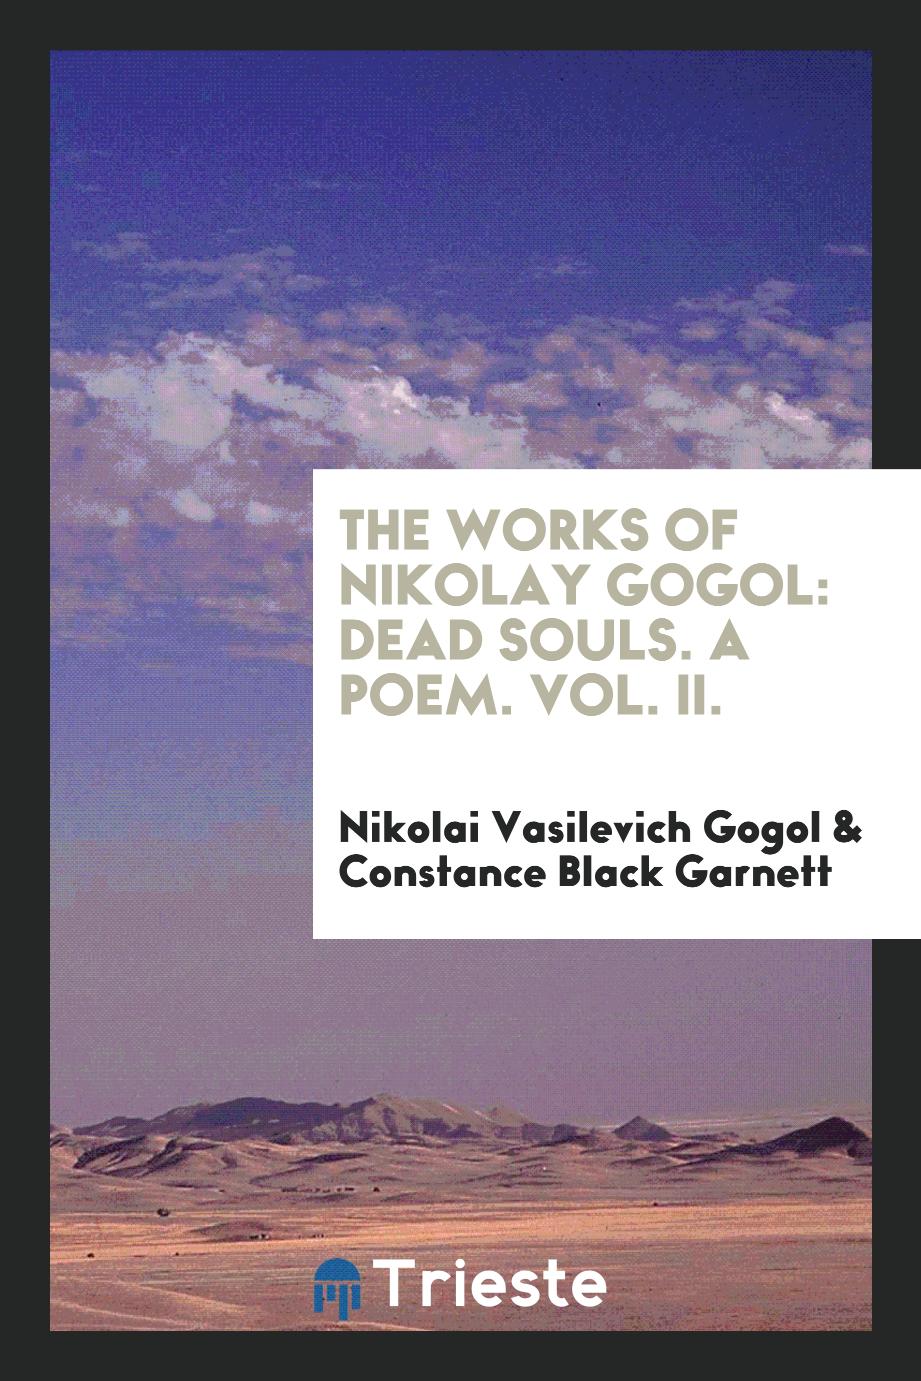 The Works of Nikolay Gogol: Dead Souls. A Poem. Vol. II.